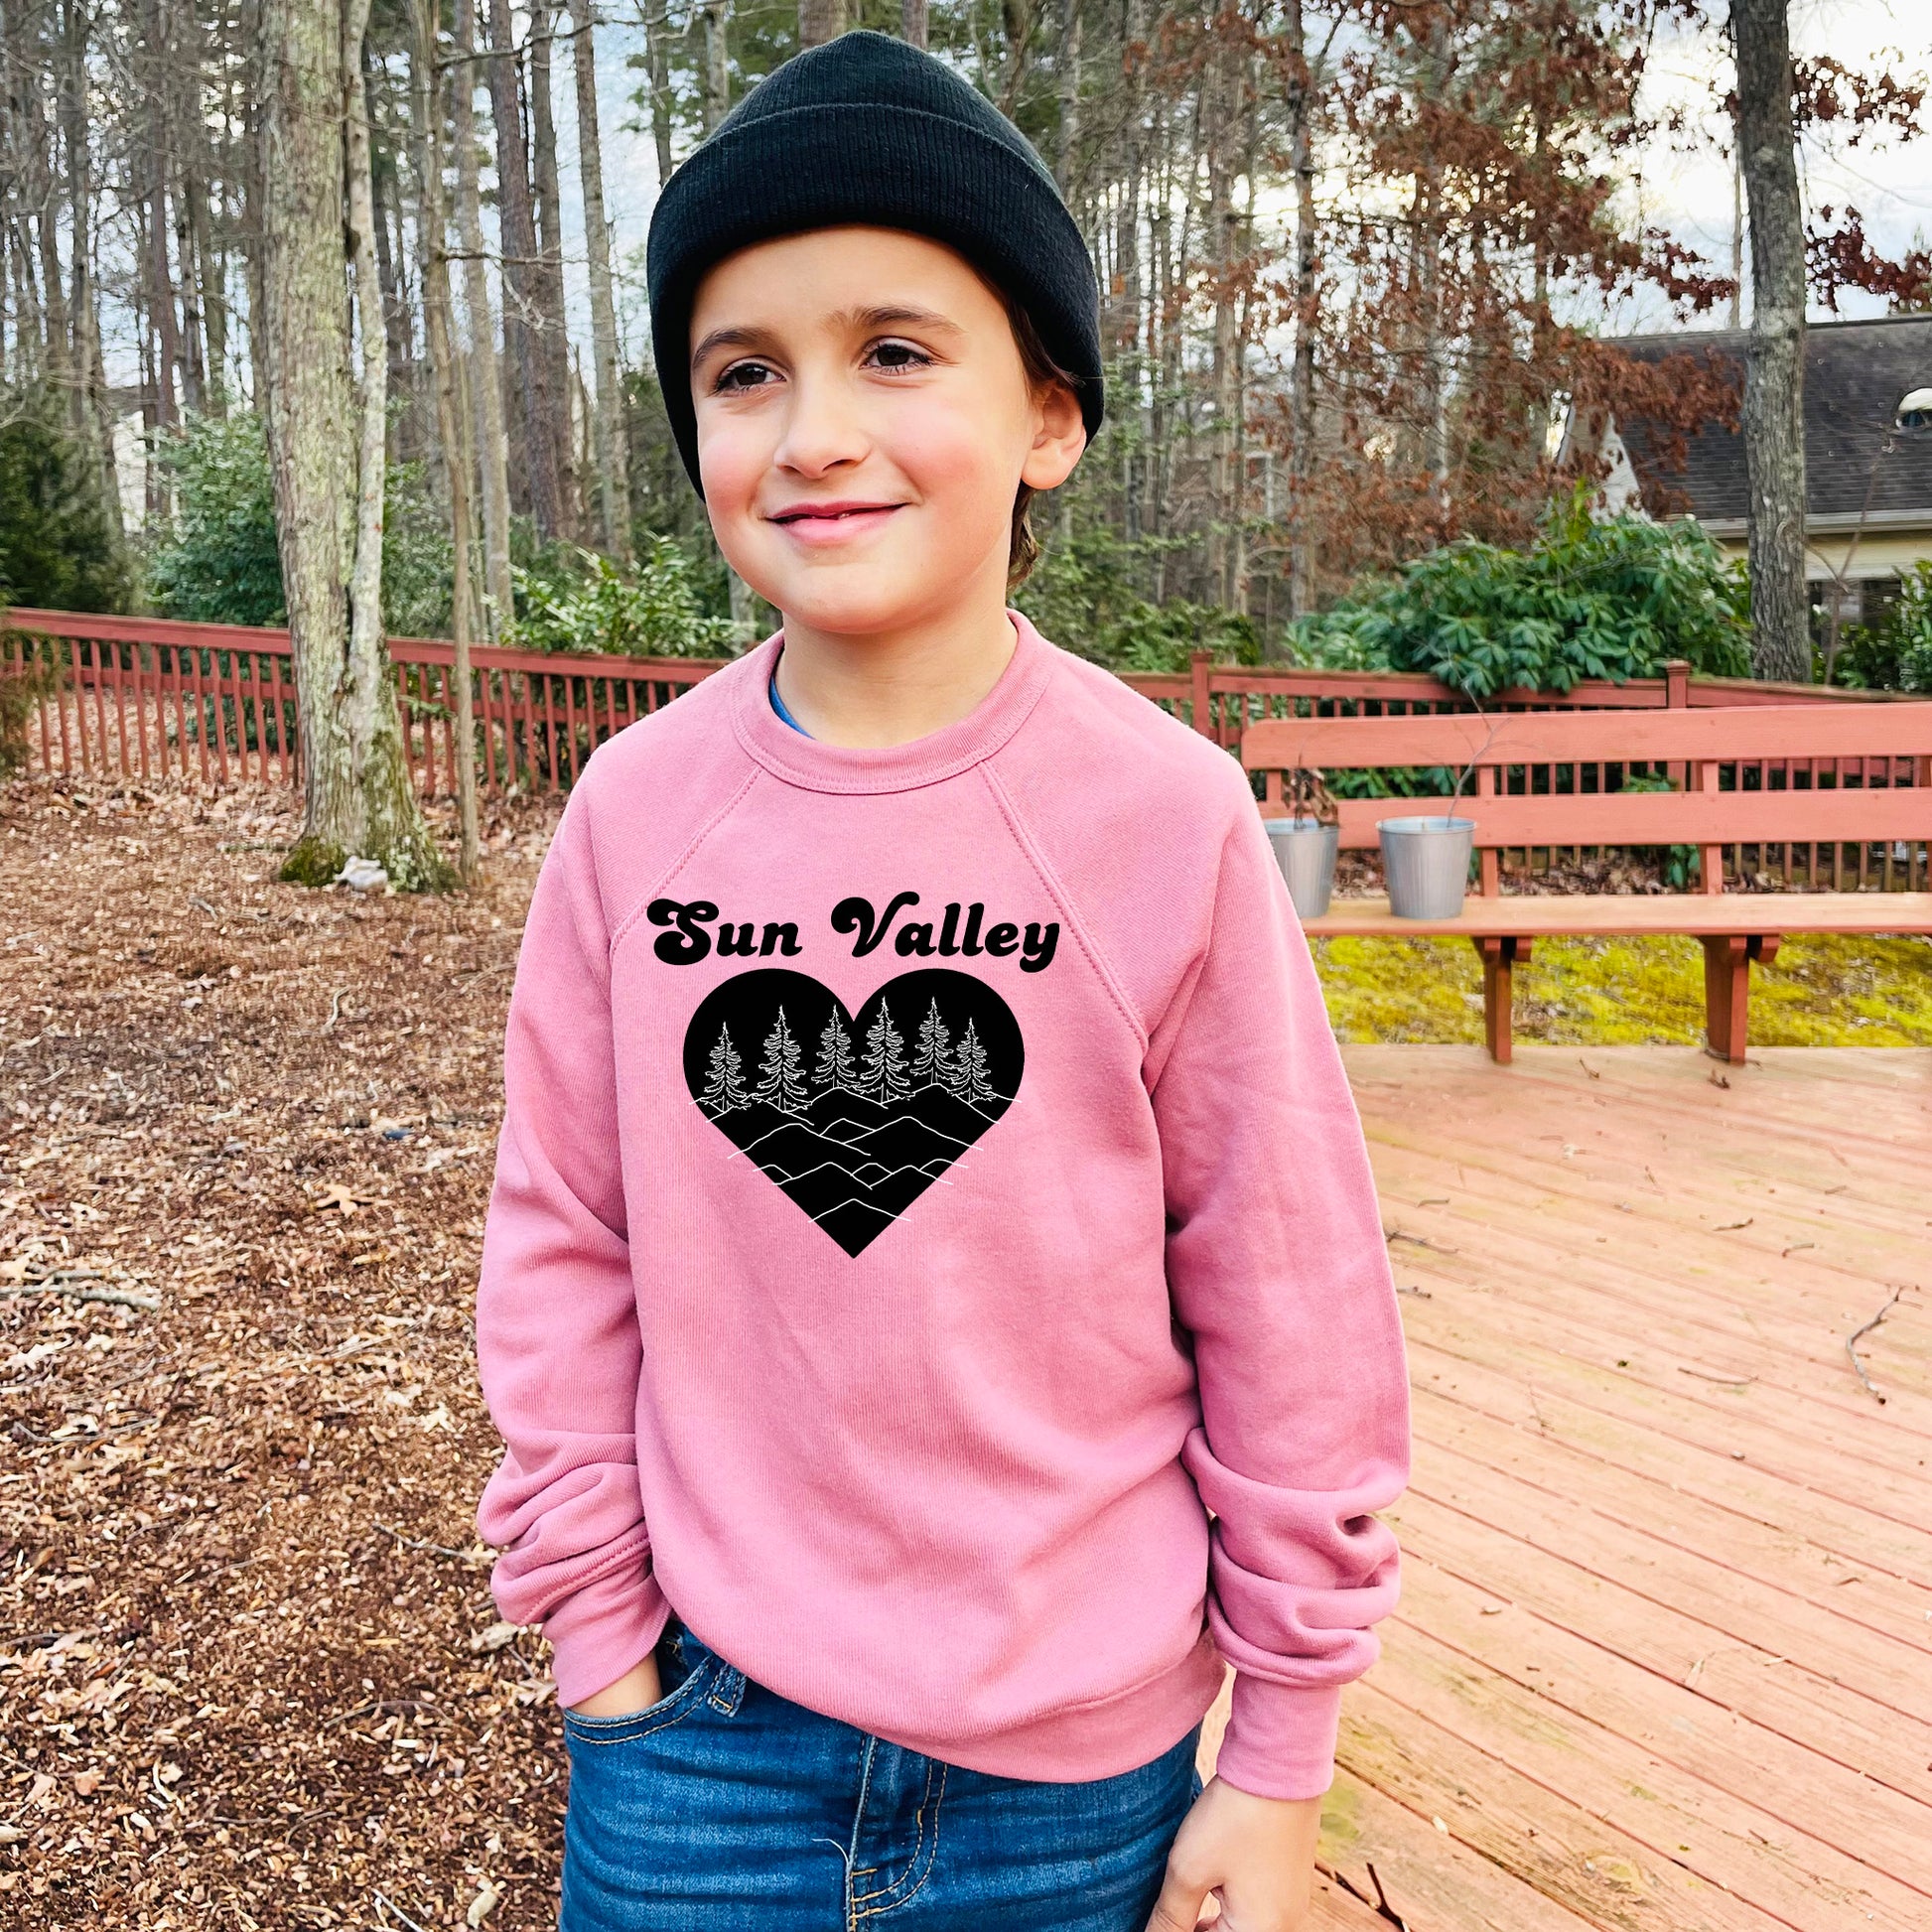 a young boy wearing a pink sun valley sweatshirt